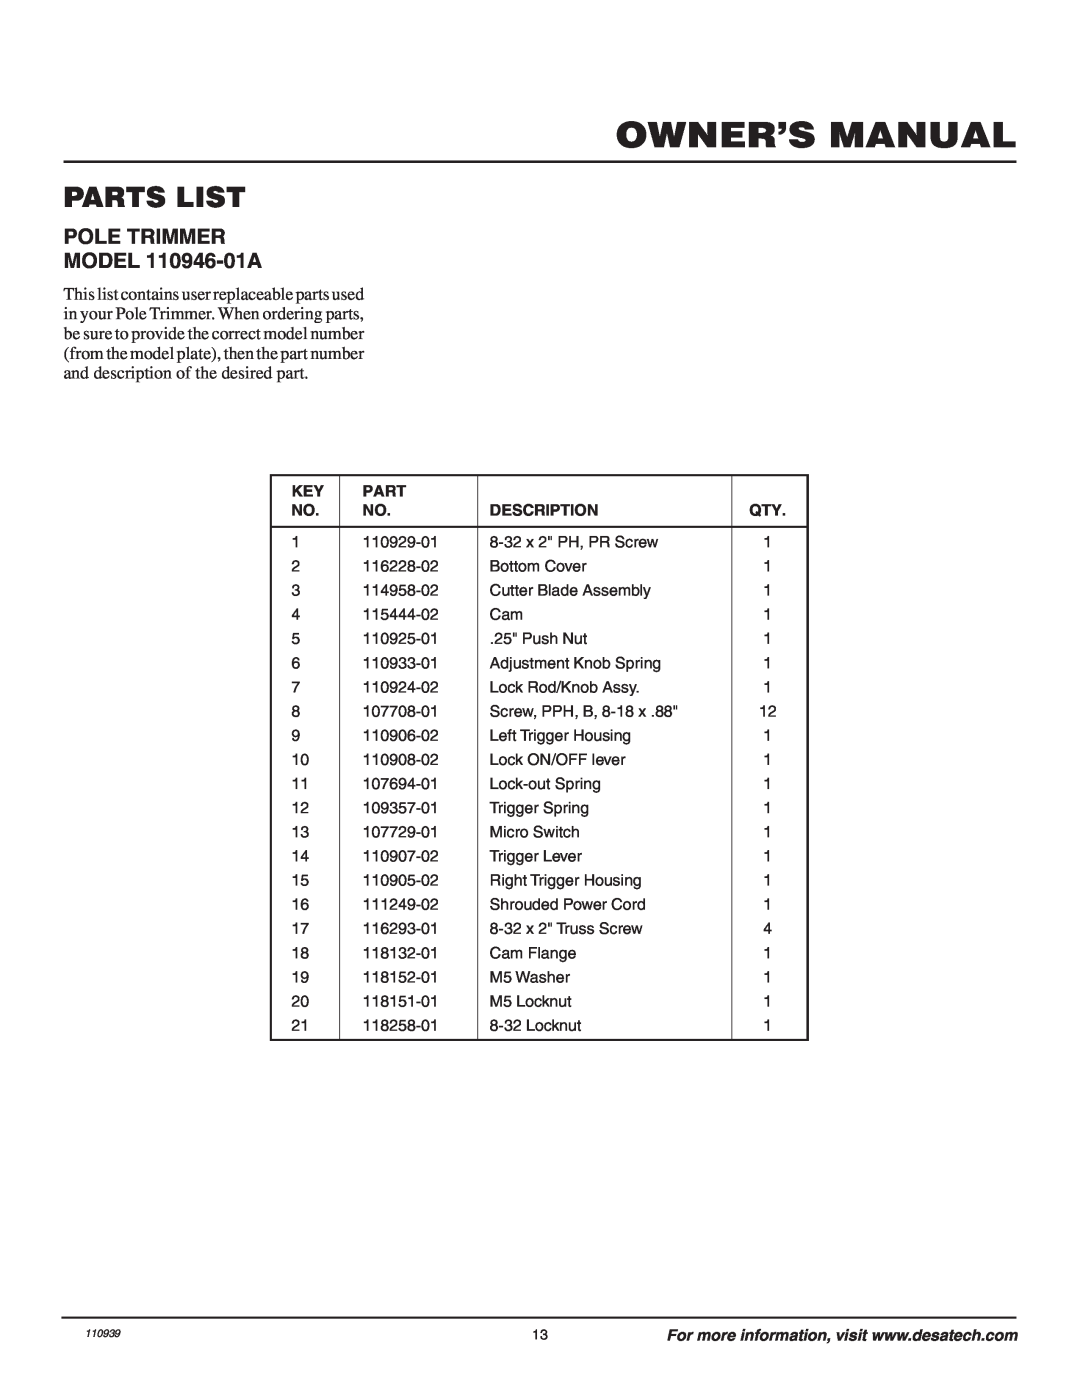 Desa owner manual Parts List, Owner’S Manual, POLE TRIMMER MODEL 110946-01A, Description 